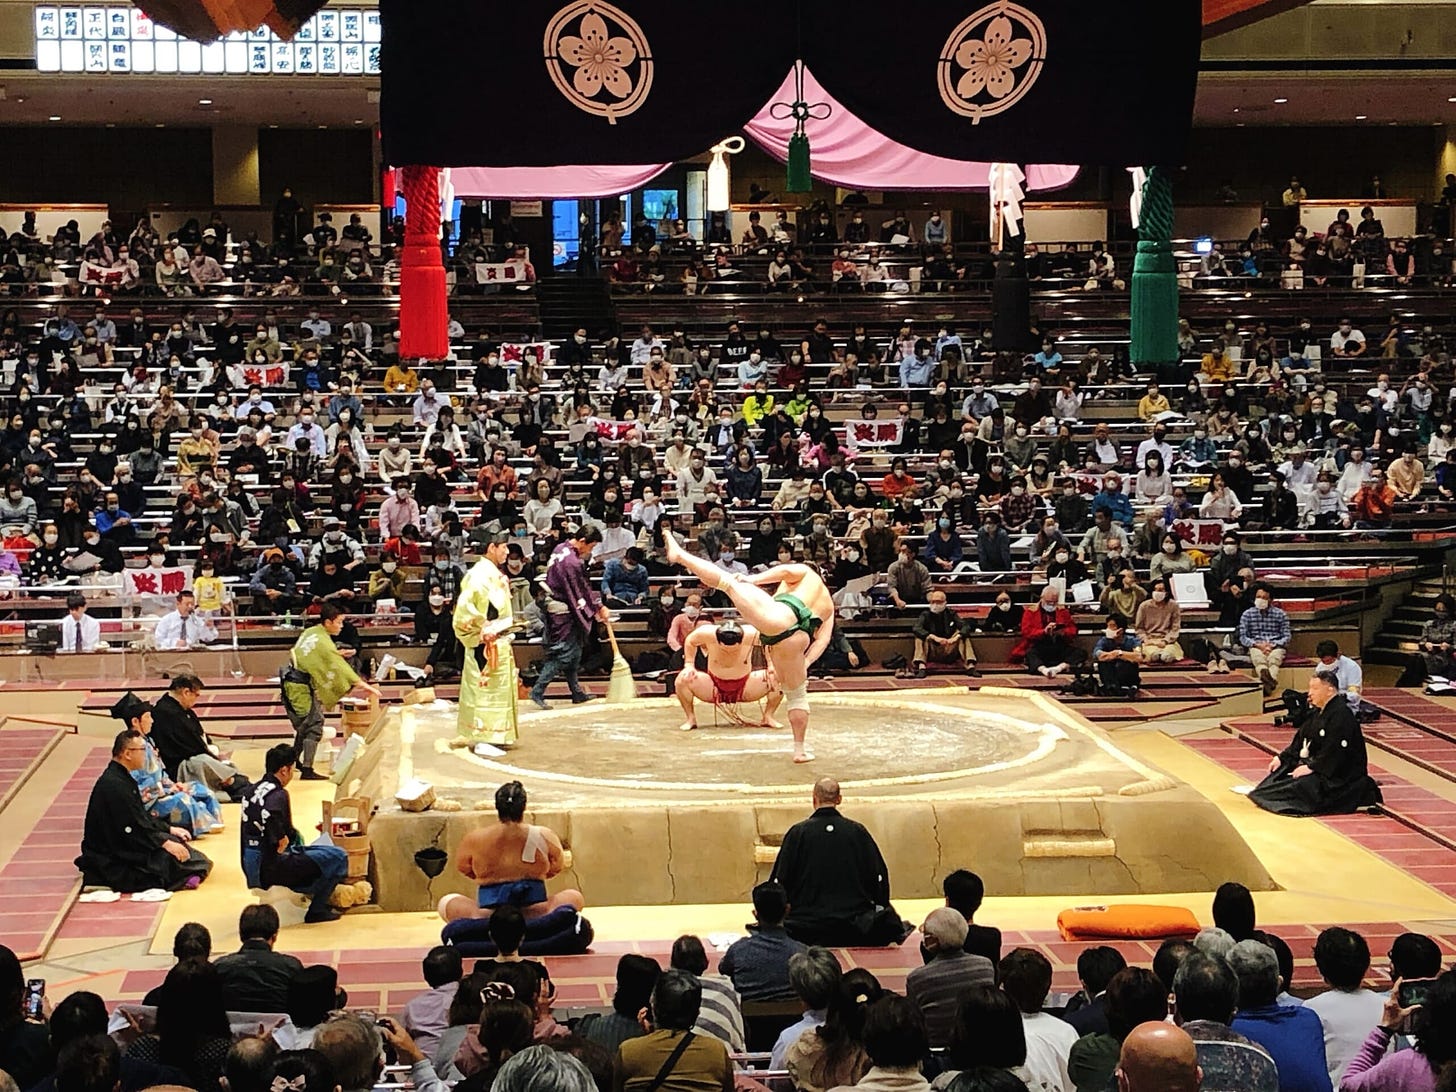 Sumo Match at Ryogoku Kokugikan